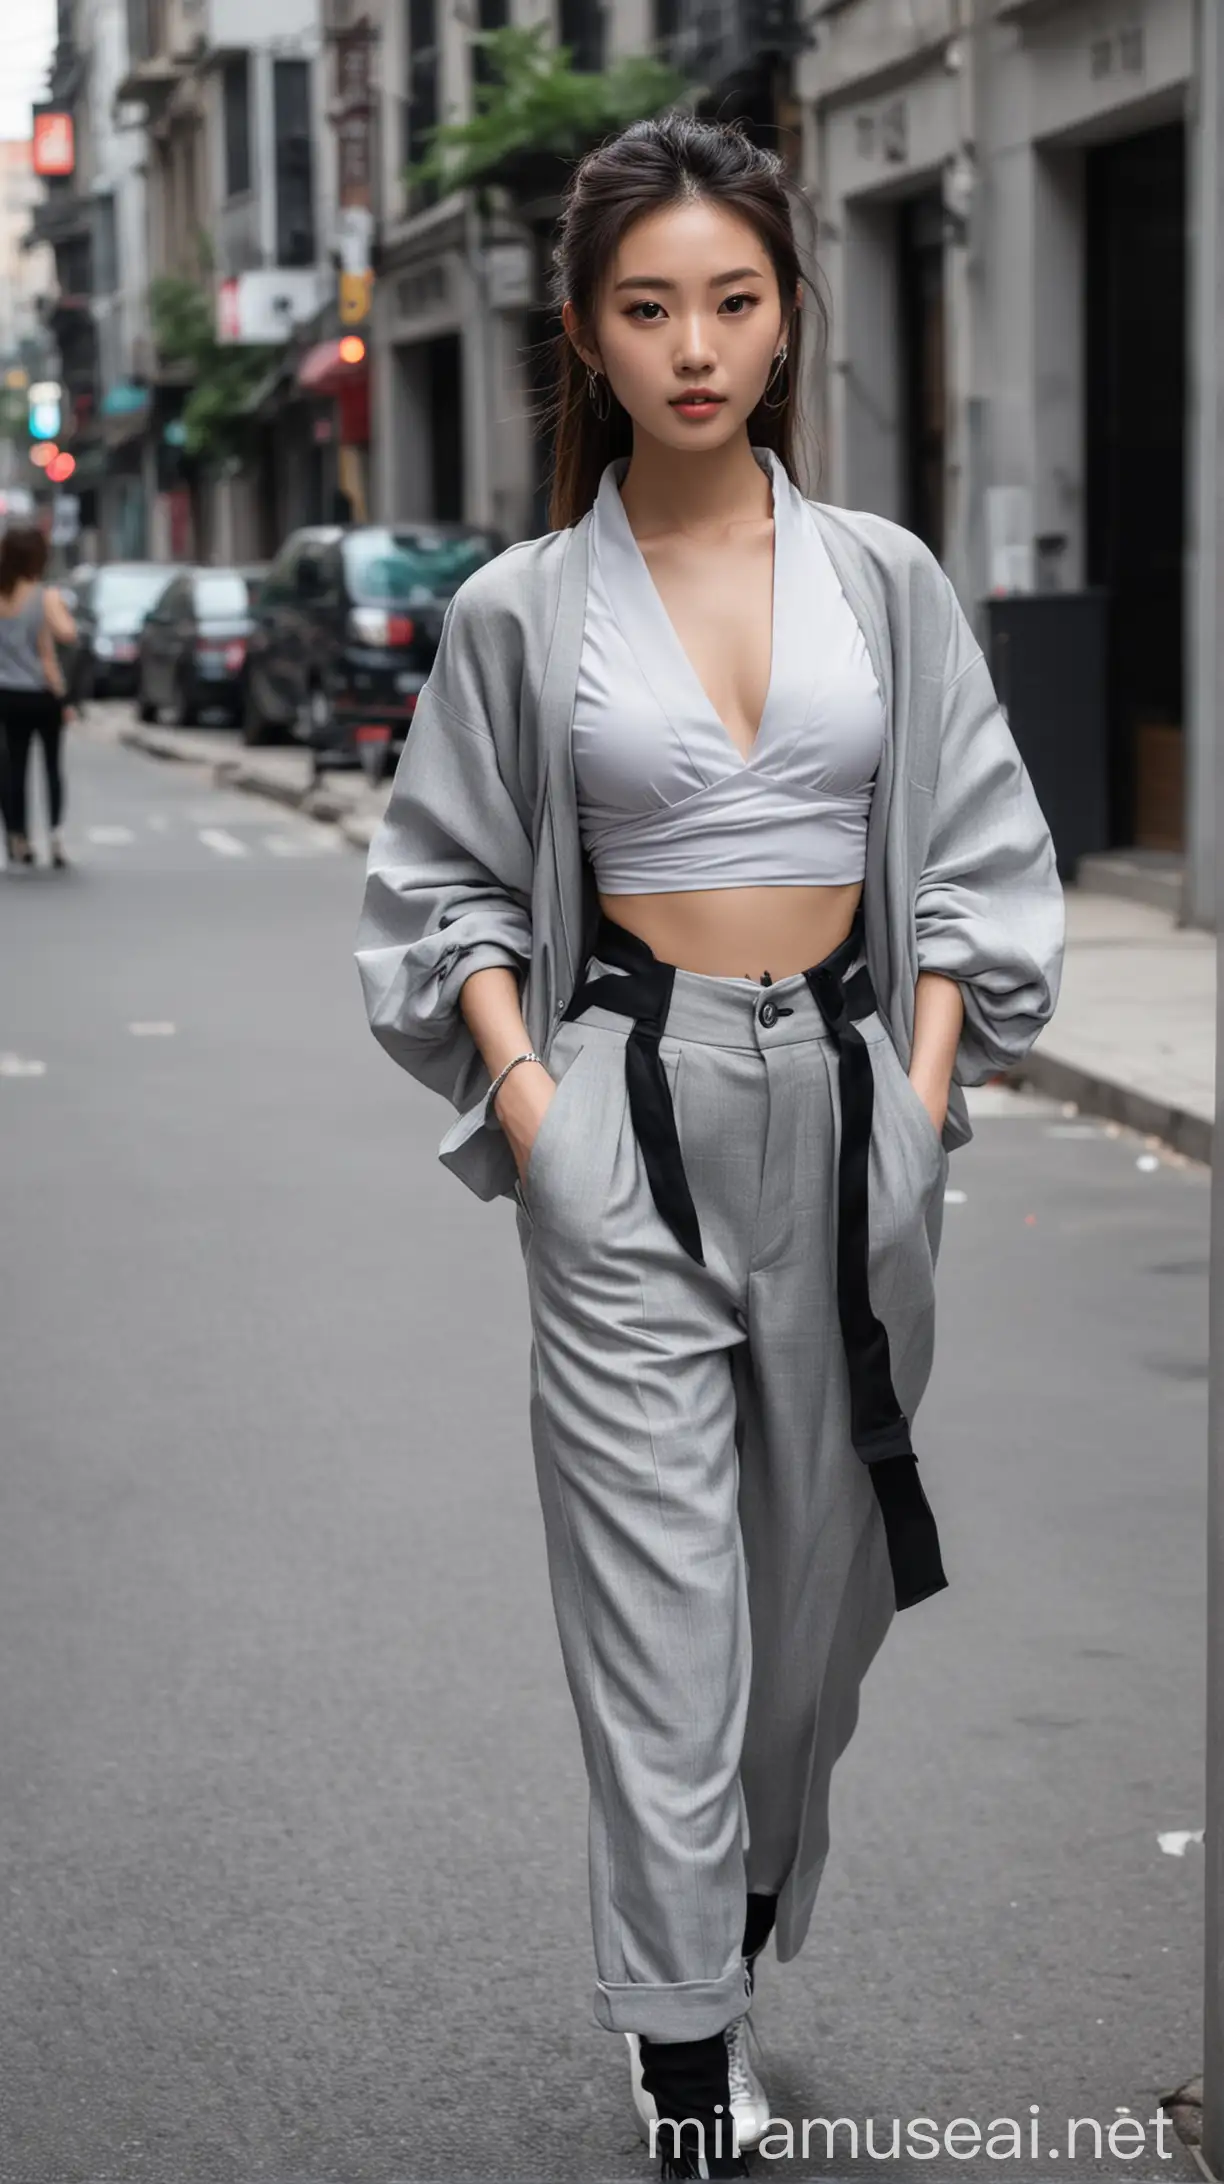 Stylish Chinese Woman in Urban Fashion on GrayBlack Streets